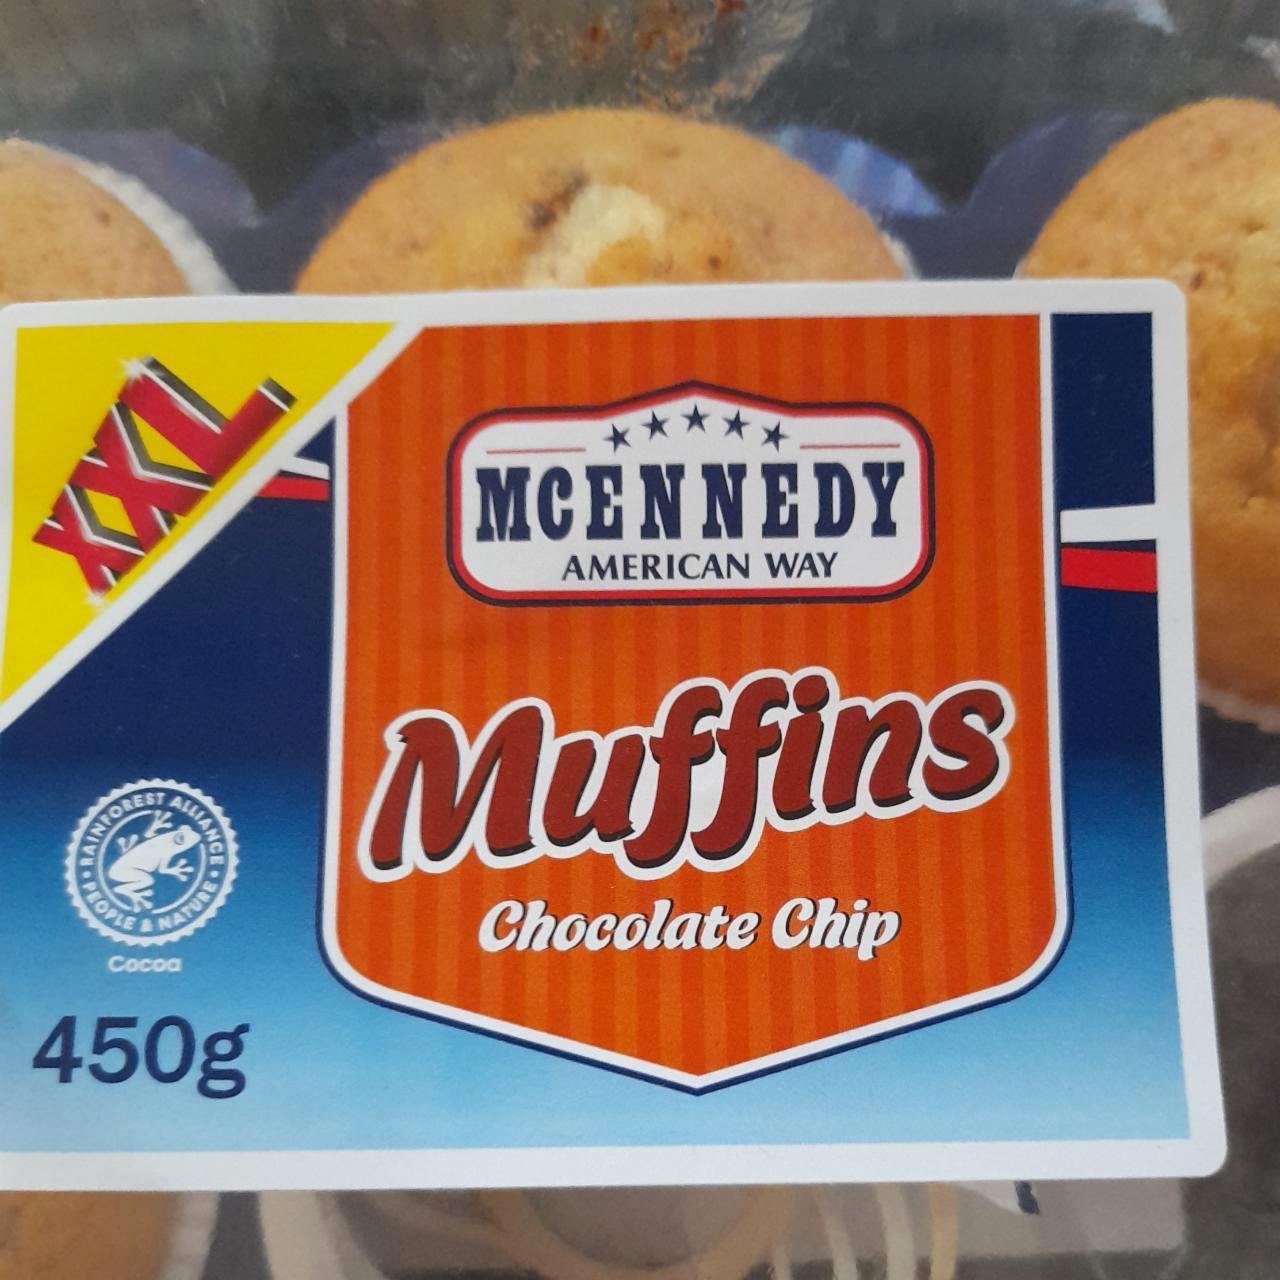 Képek - Muffins chocolate chip Mcennedy American way